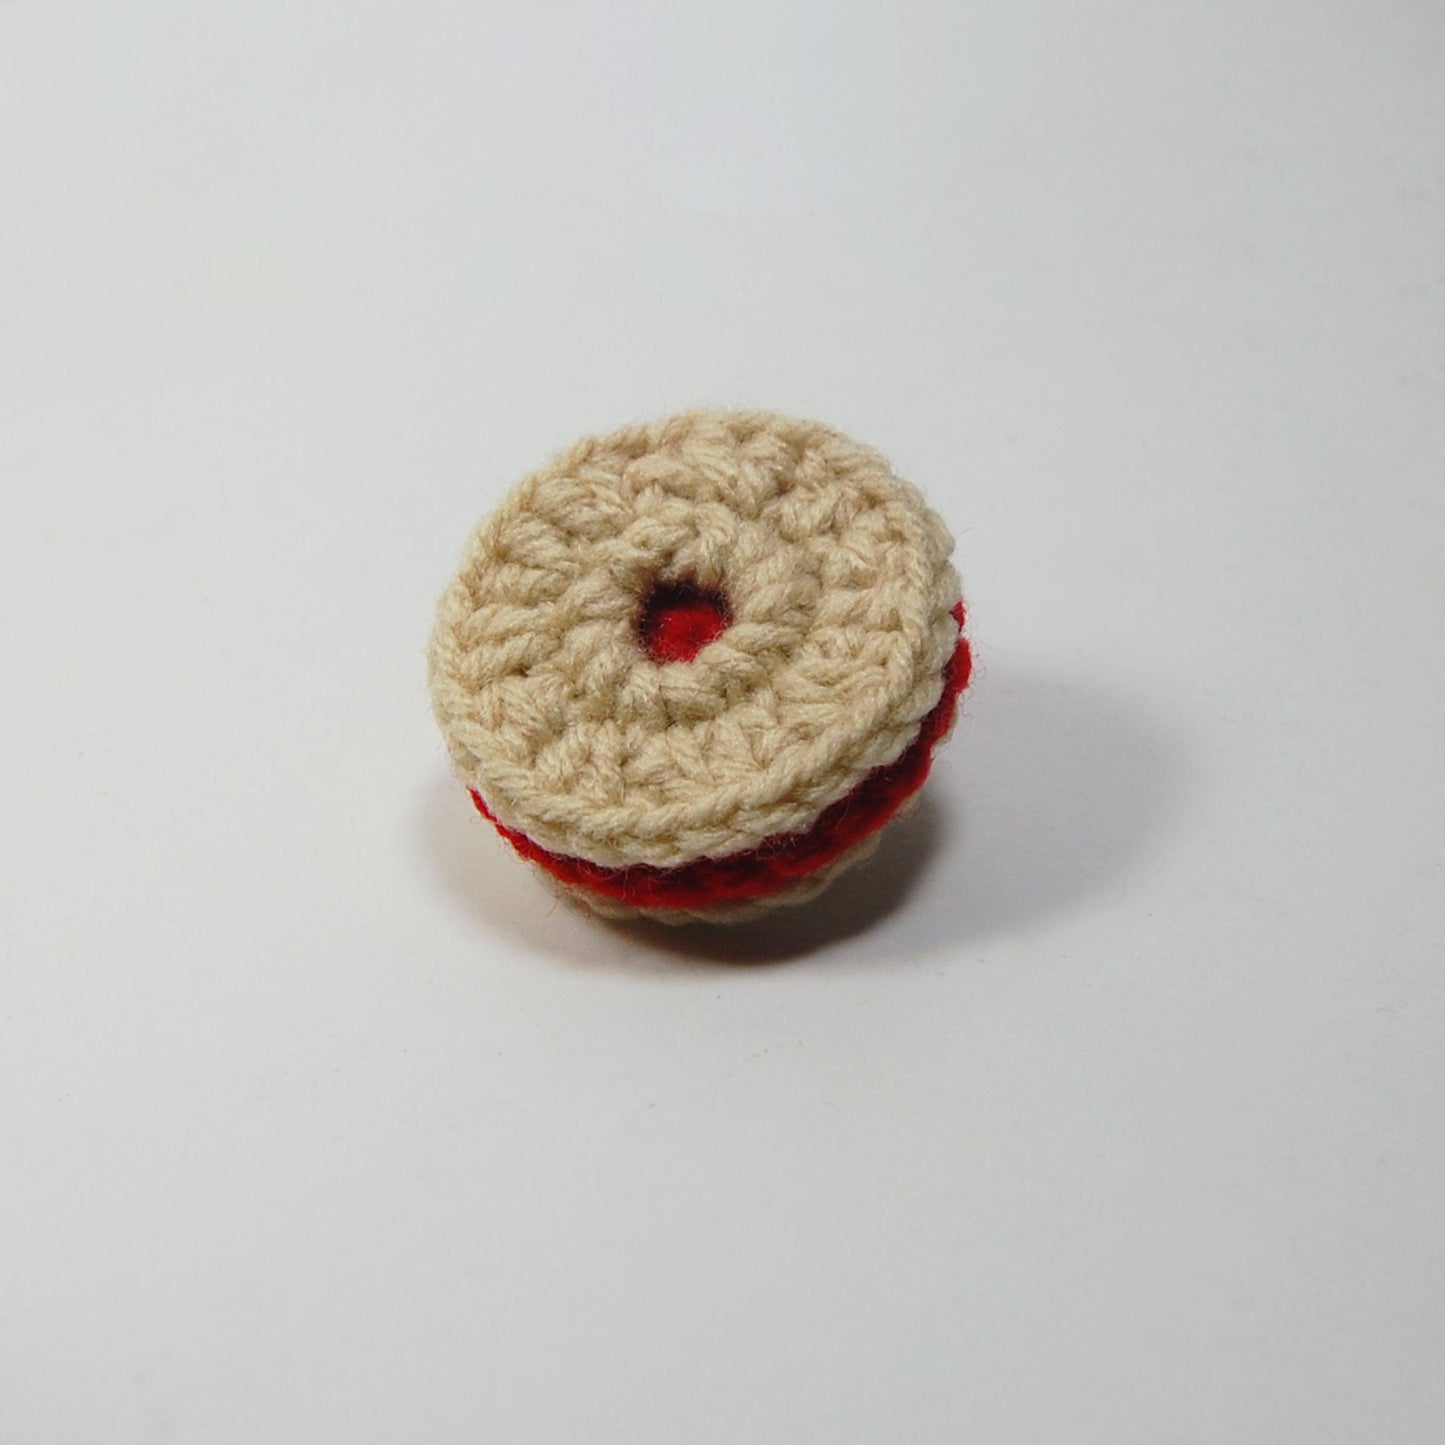 Crochet Jam Cookie Pattern